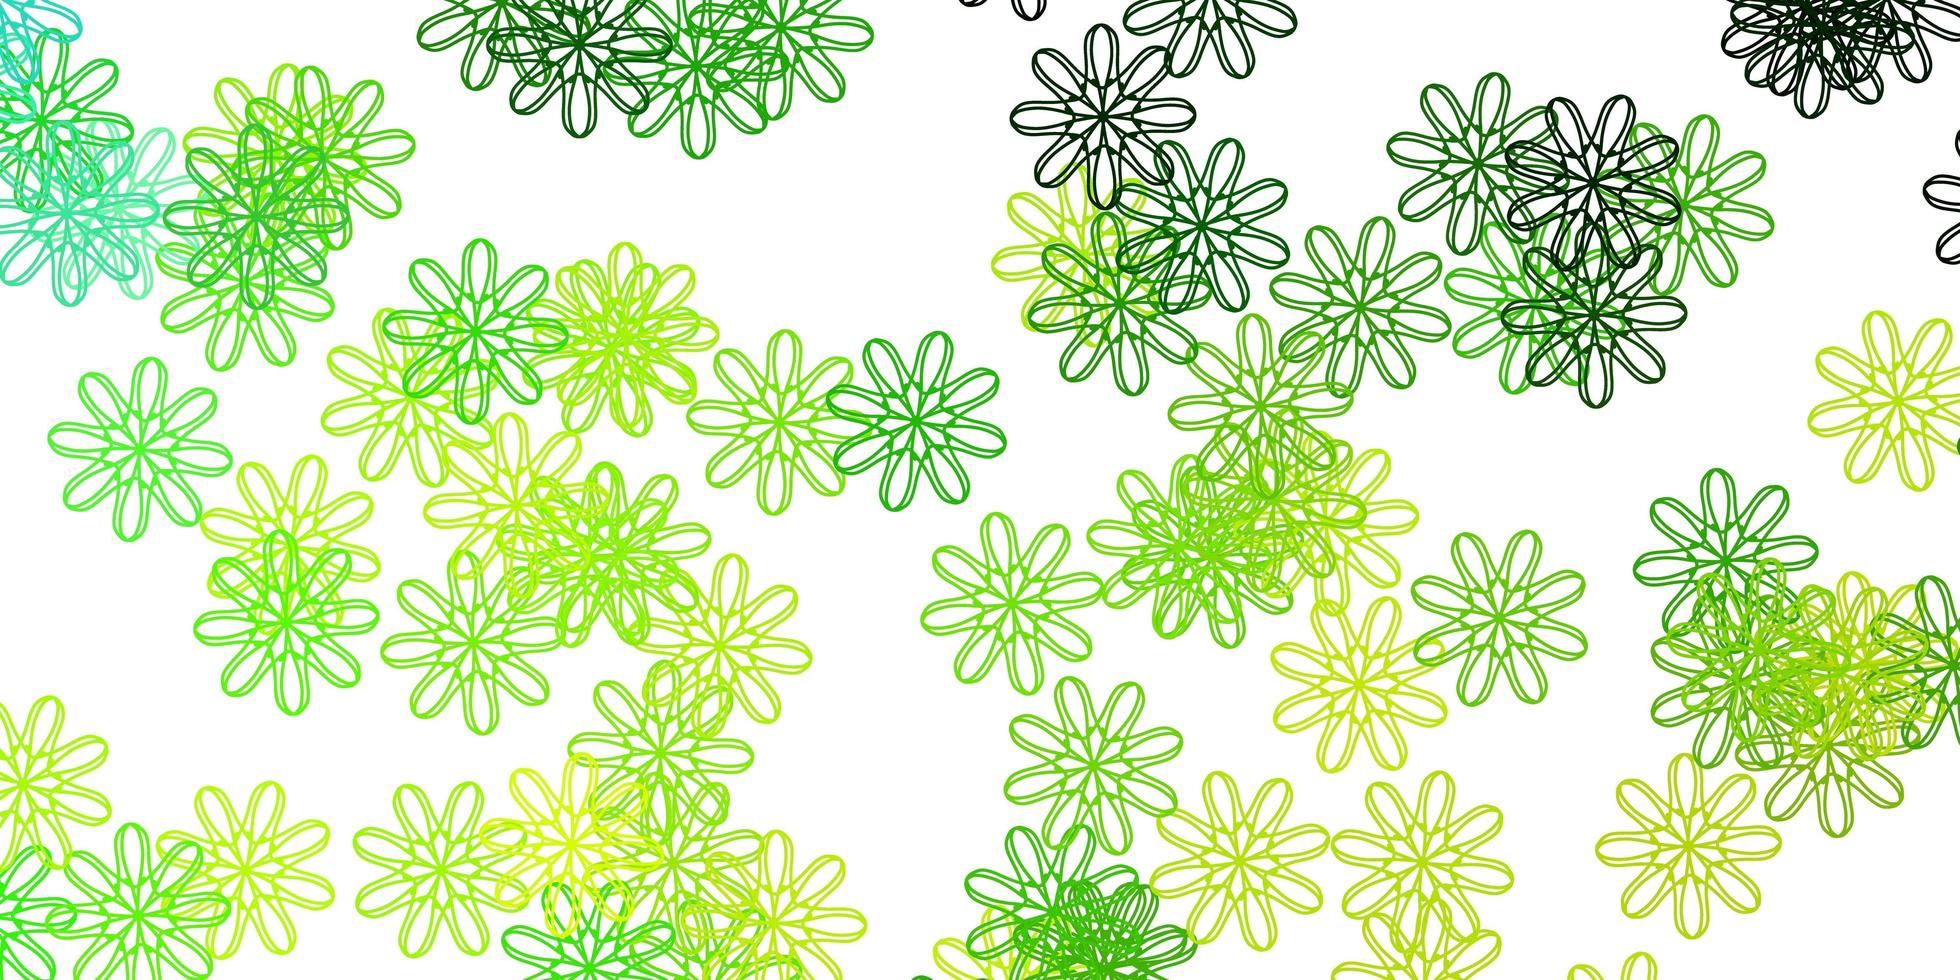 textura de doodle de vector amarillo verde claro con flores